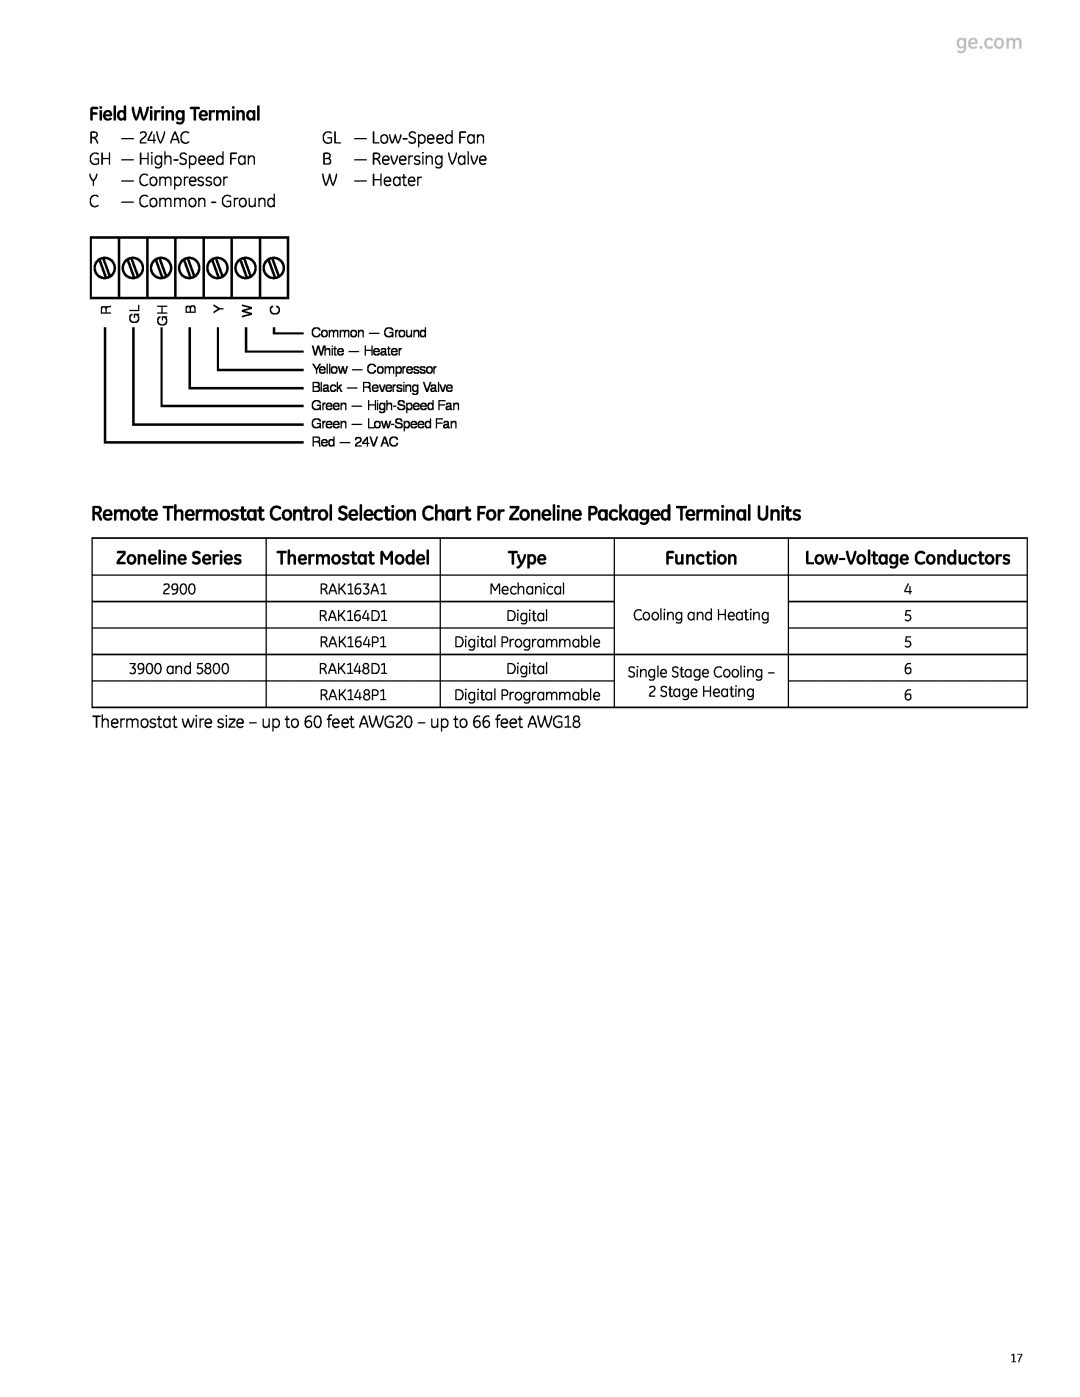 GE Monogram 2900 Series Zoneline Series, Type, Function, Thermostat Model, Low-VoltageConductors, Field Wiring Terminal 